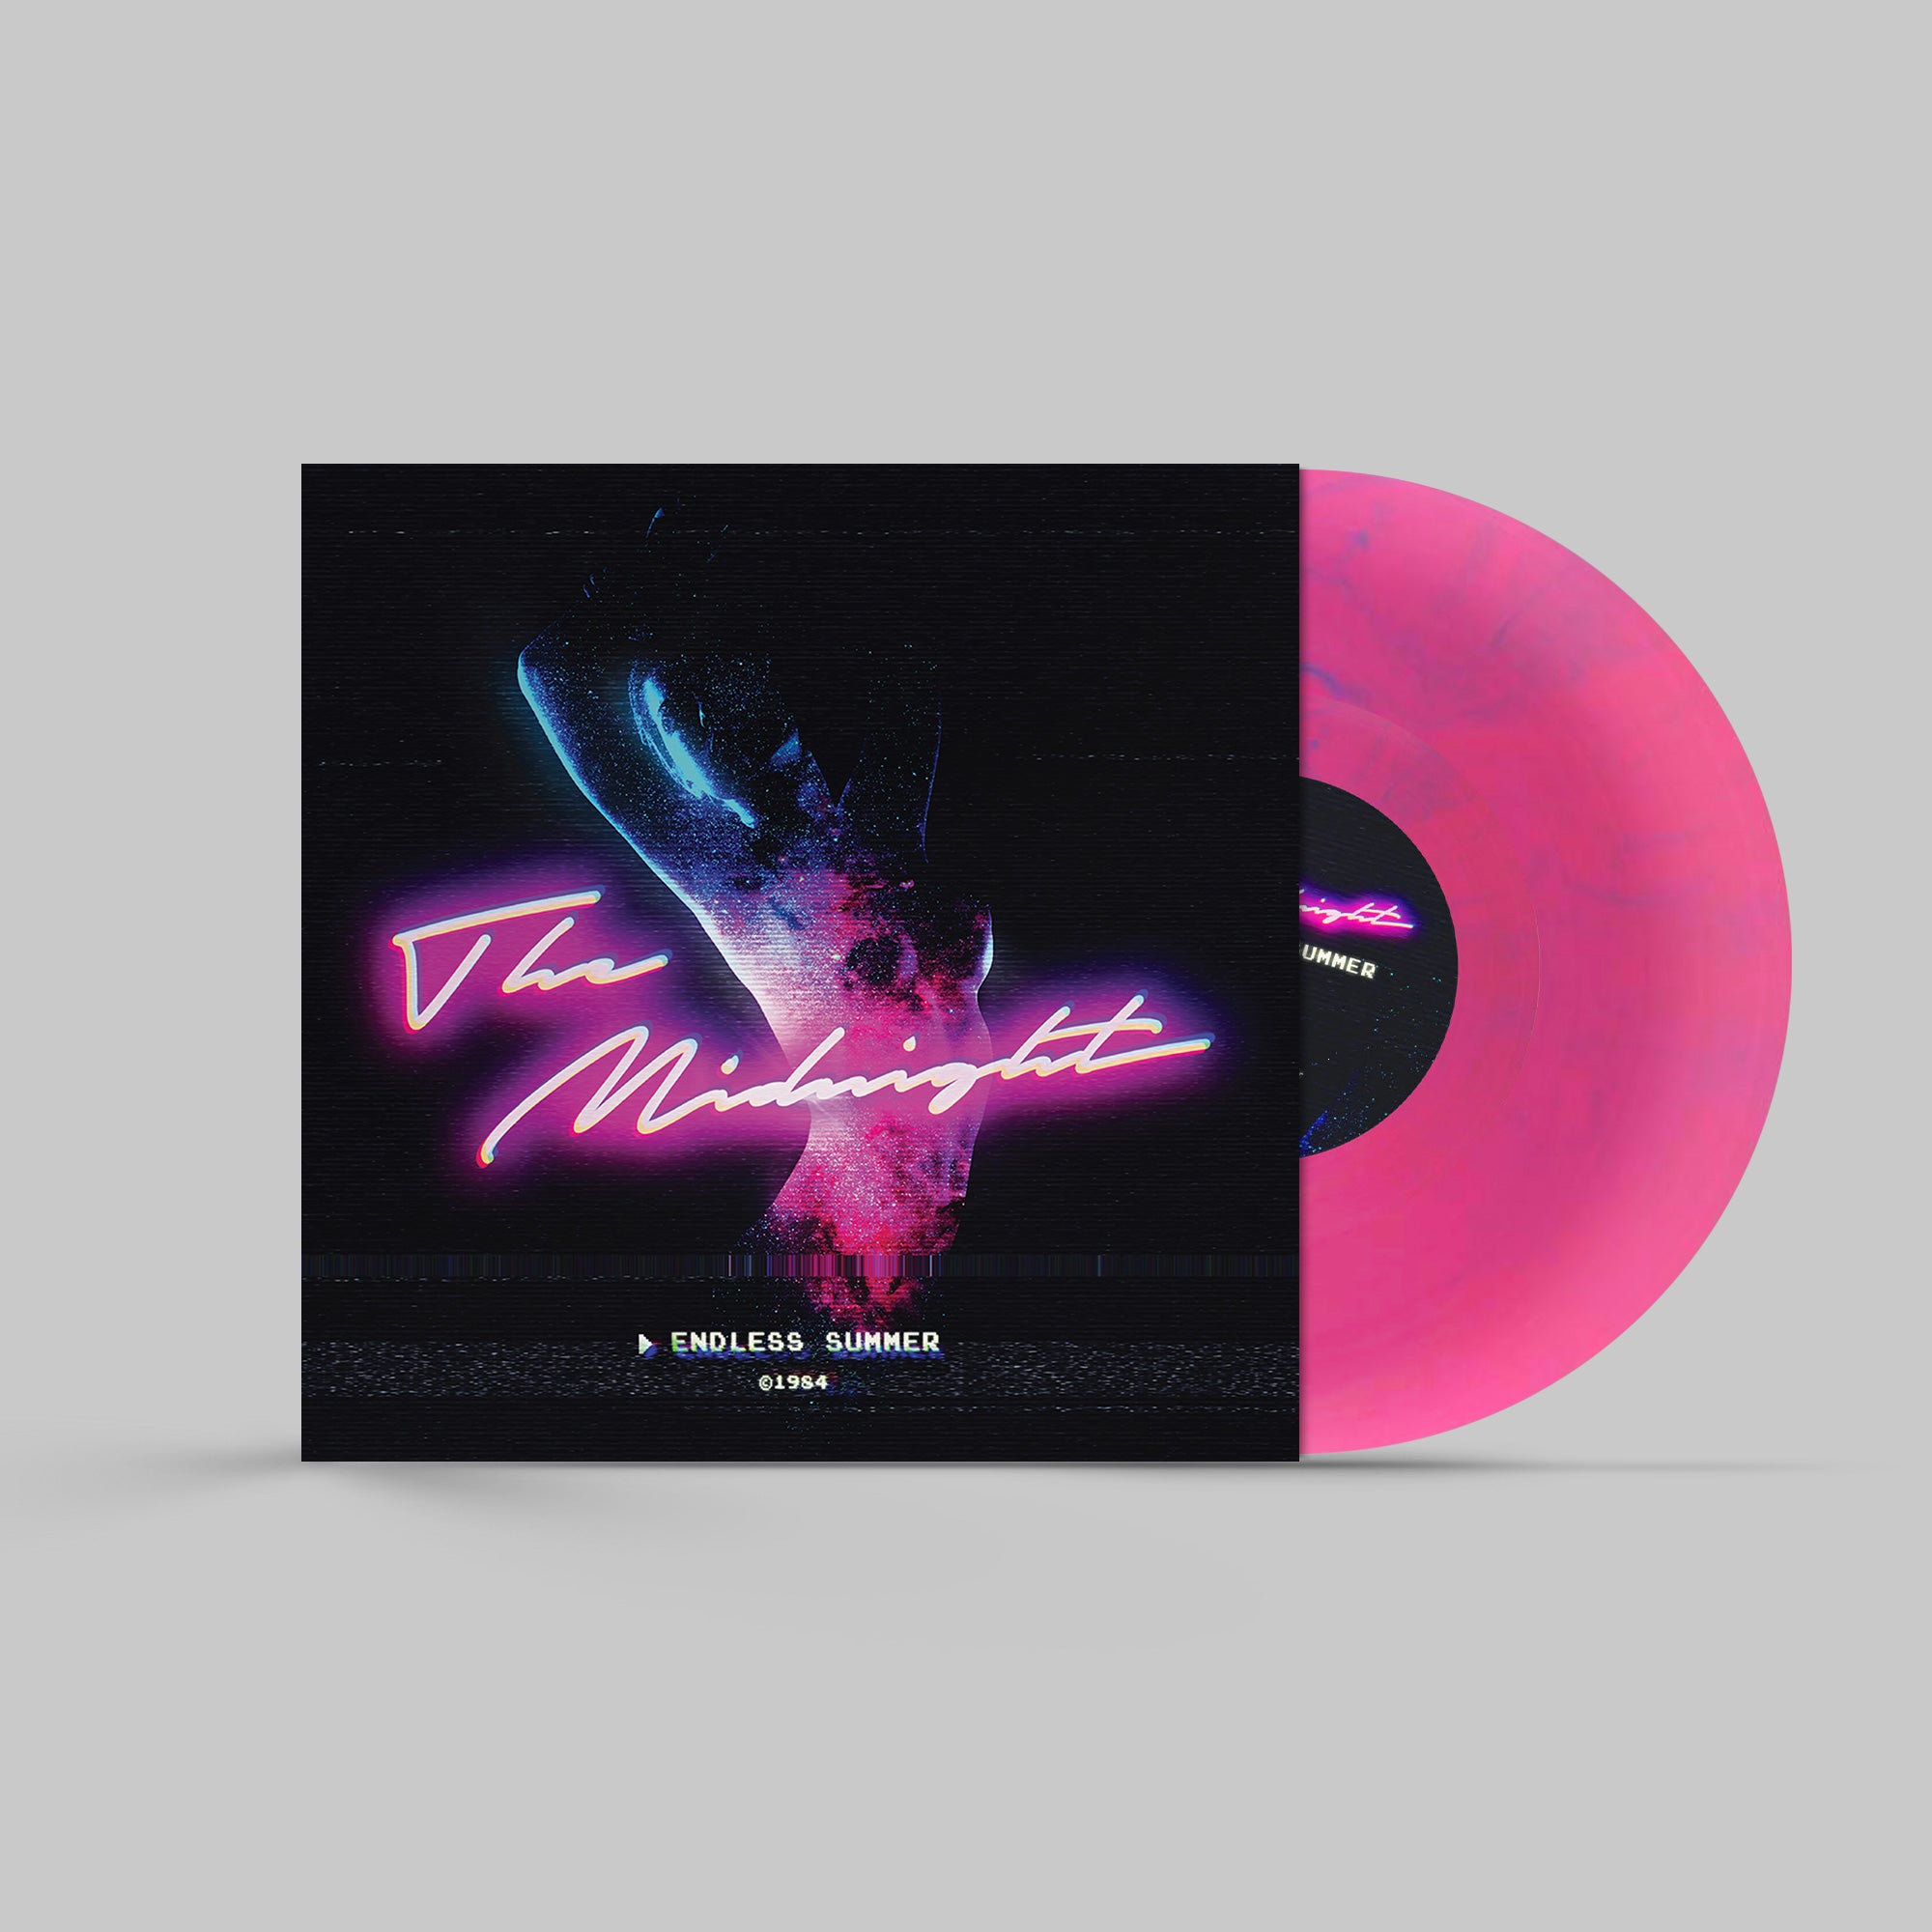 Endless Summer Double (Pink/Blue Swirl) LP – Midnight (US)